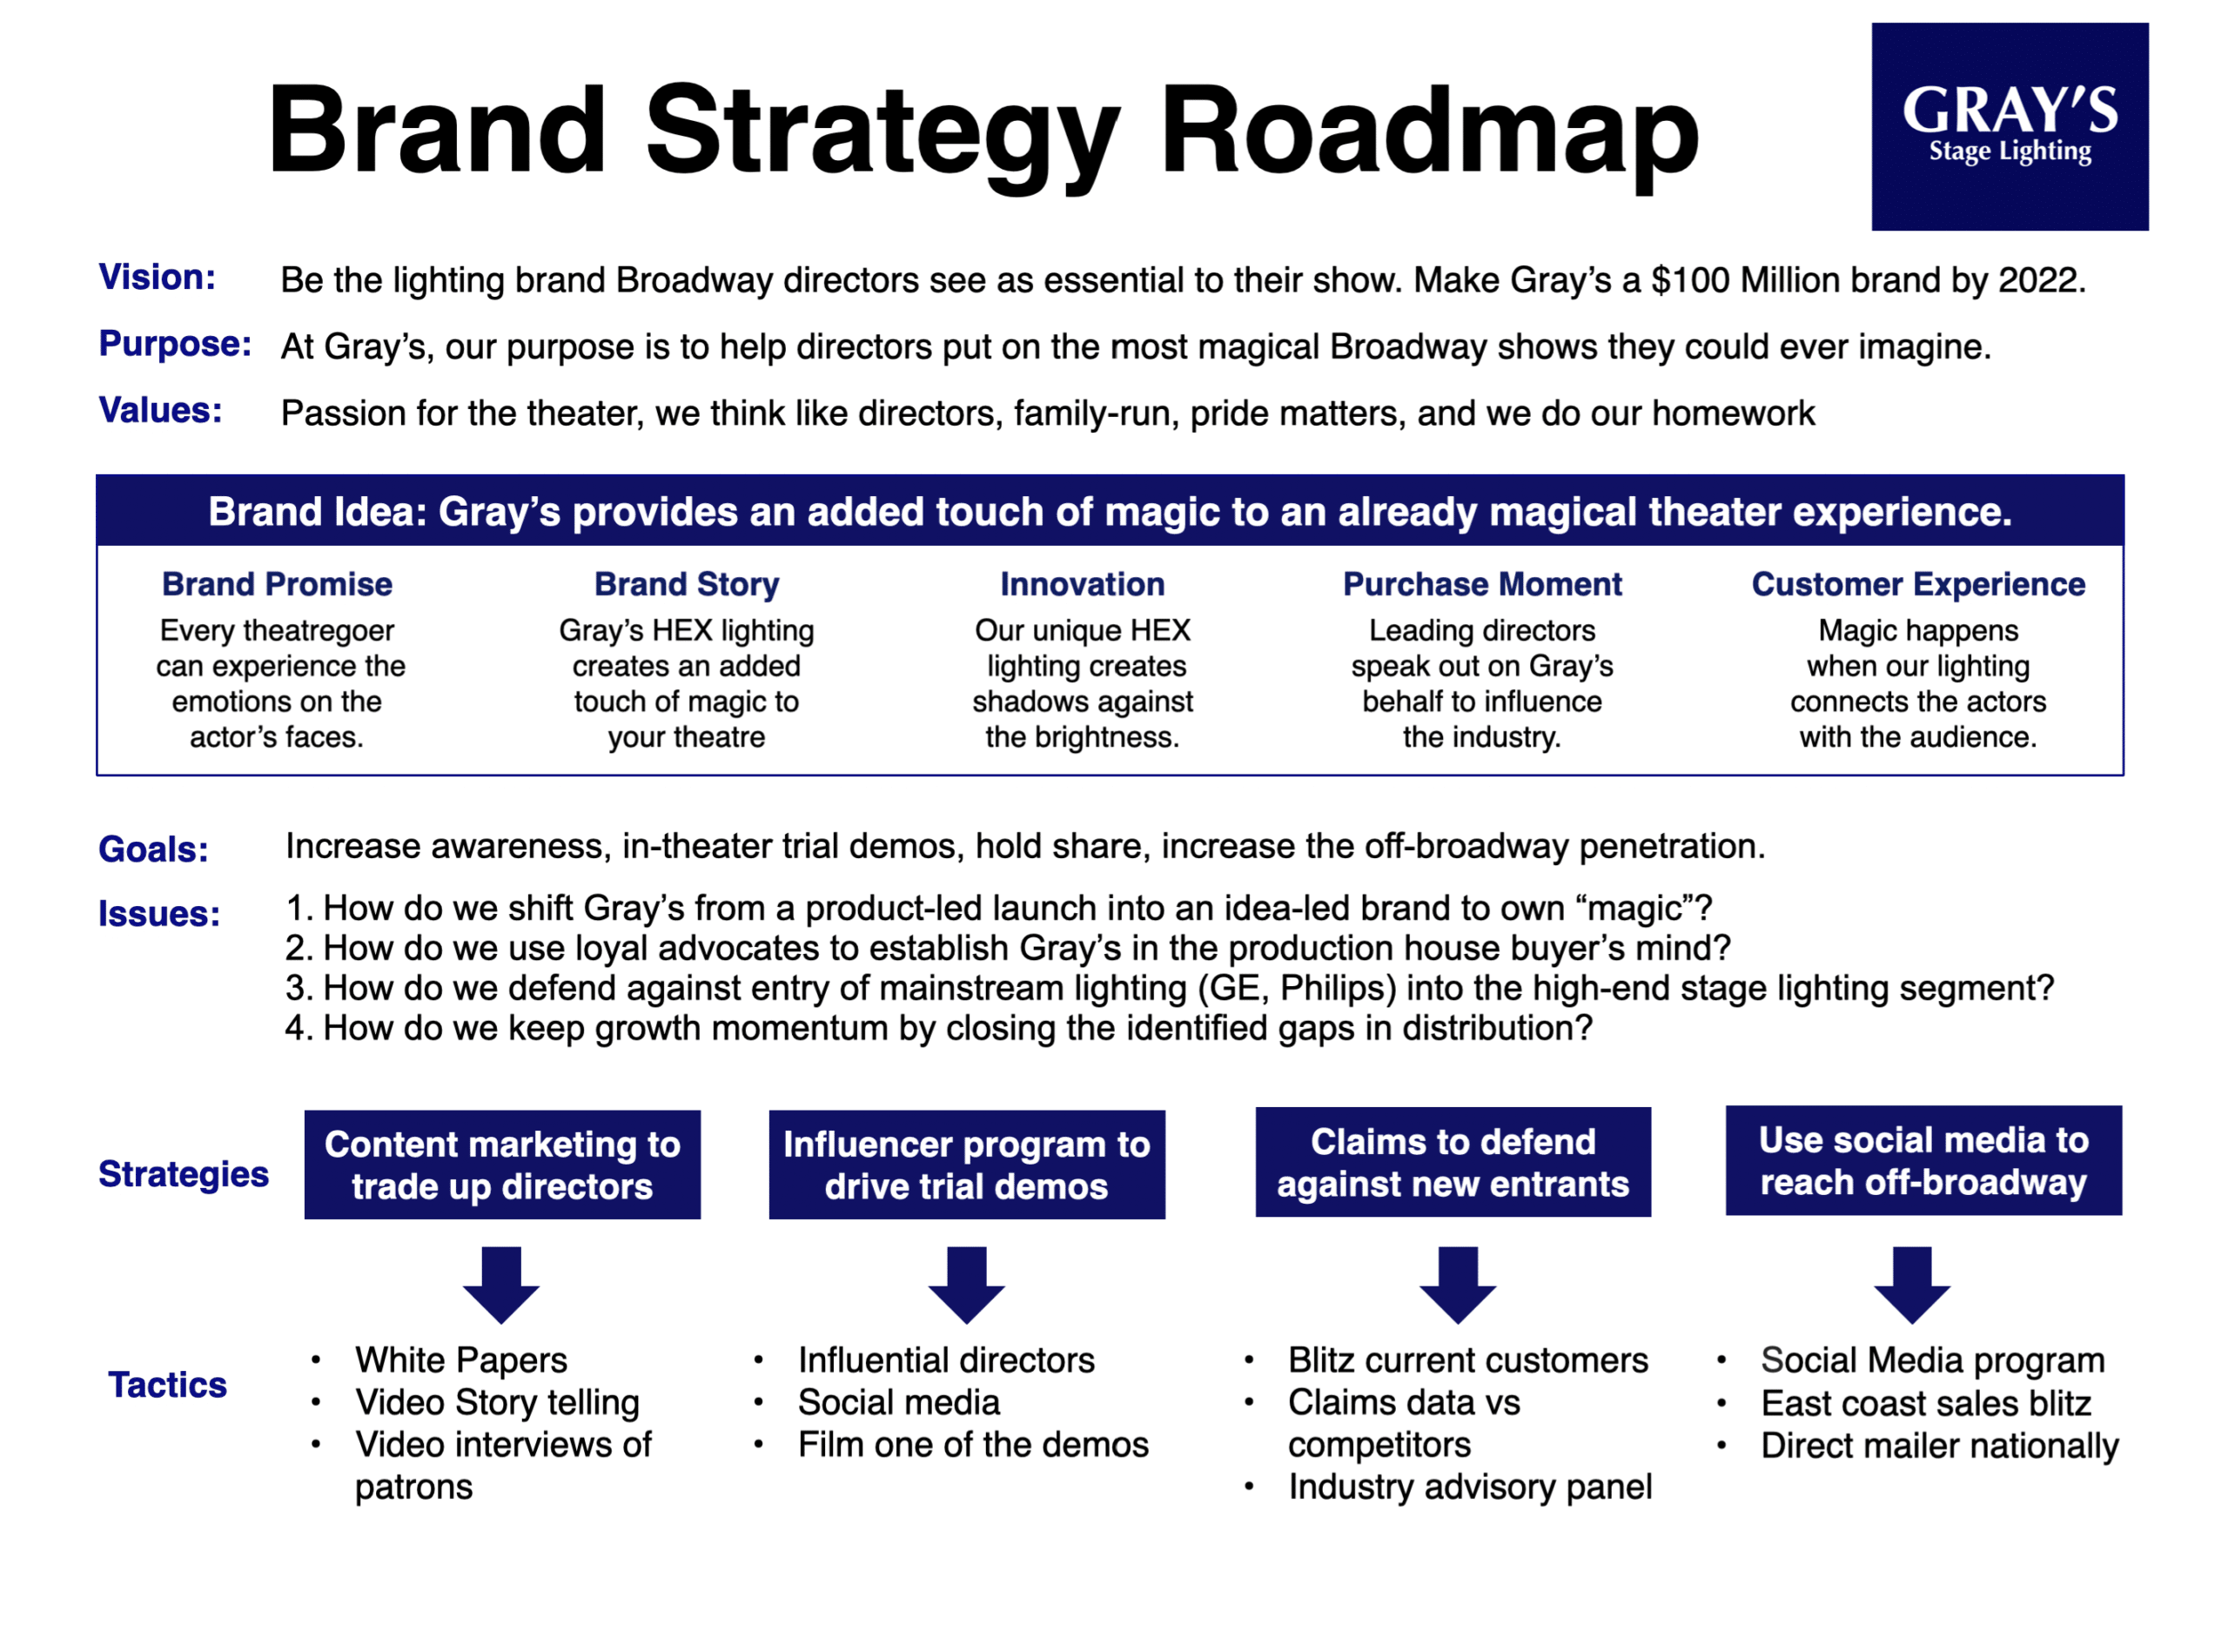 Brand Strategy Roadmap CPG